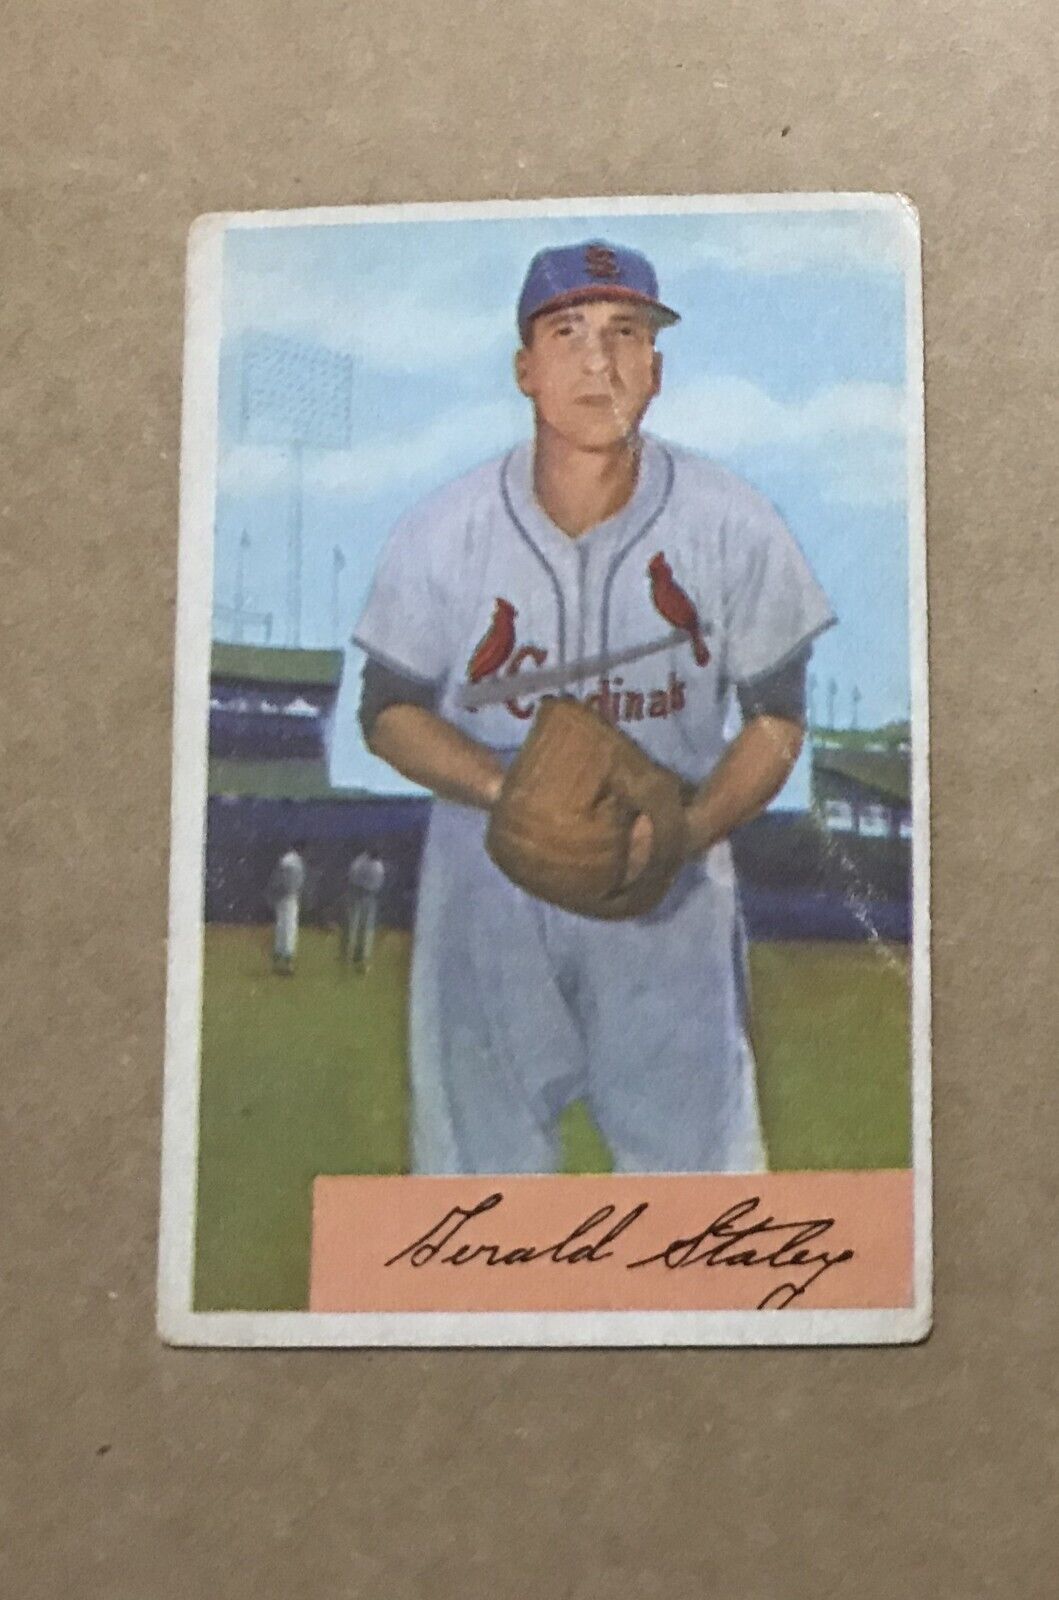 Gerry Staley card # 14 Pitcher Cardinals Vintage Baseball Card 1954